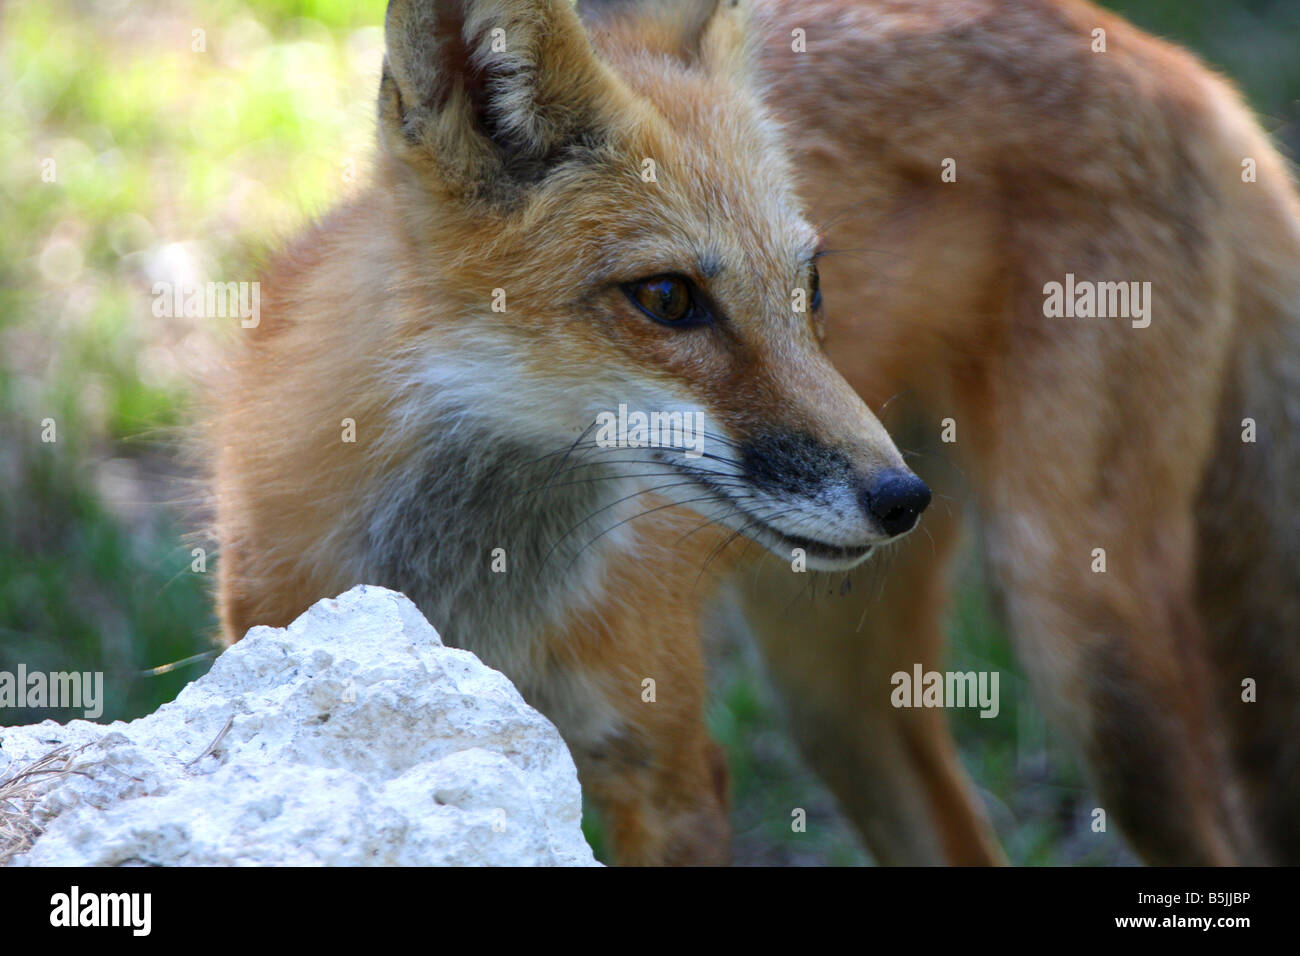 stock photo of wild red fox in Homosassa Florida Stock Photo